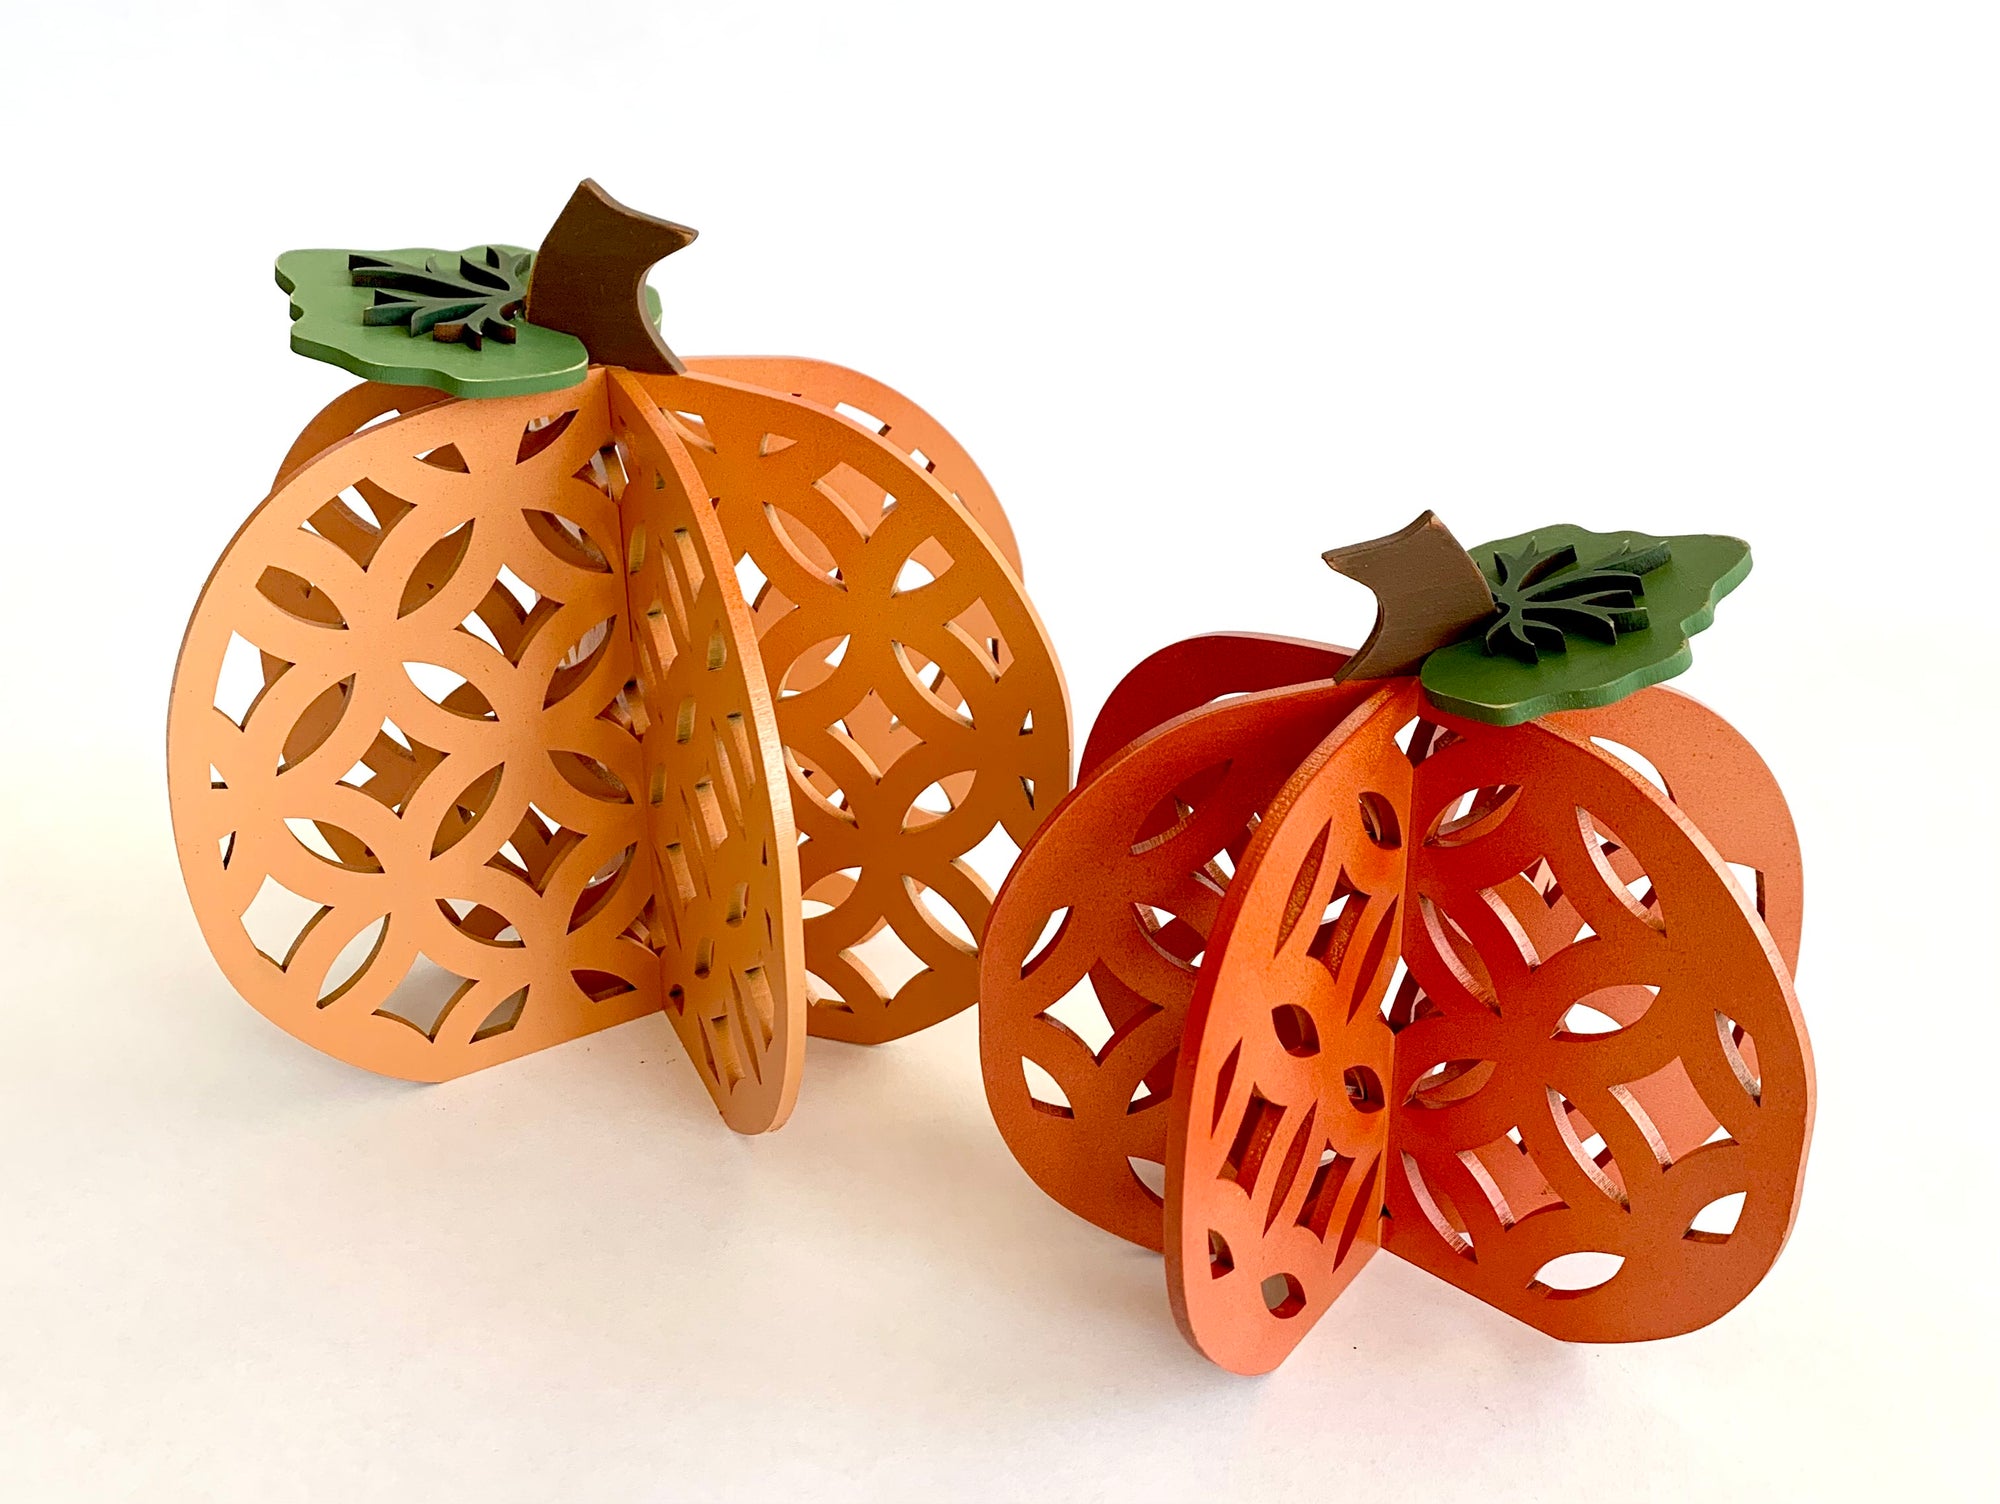 3D wood pumpkins craft kit, 3D pumpkins for fall decorations for a shelf or mantle.  